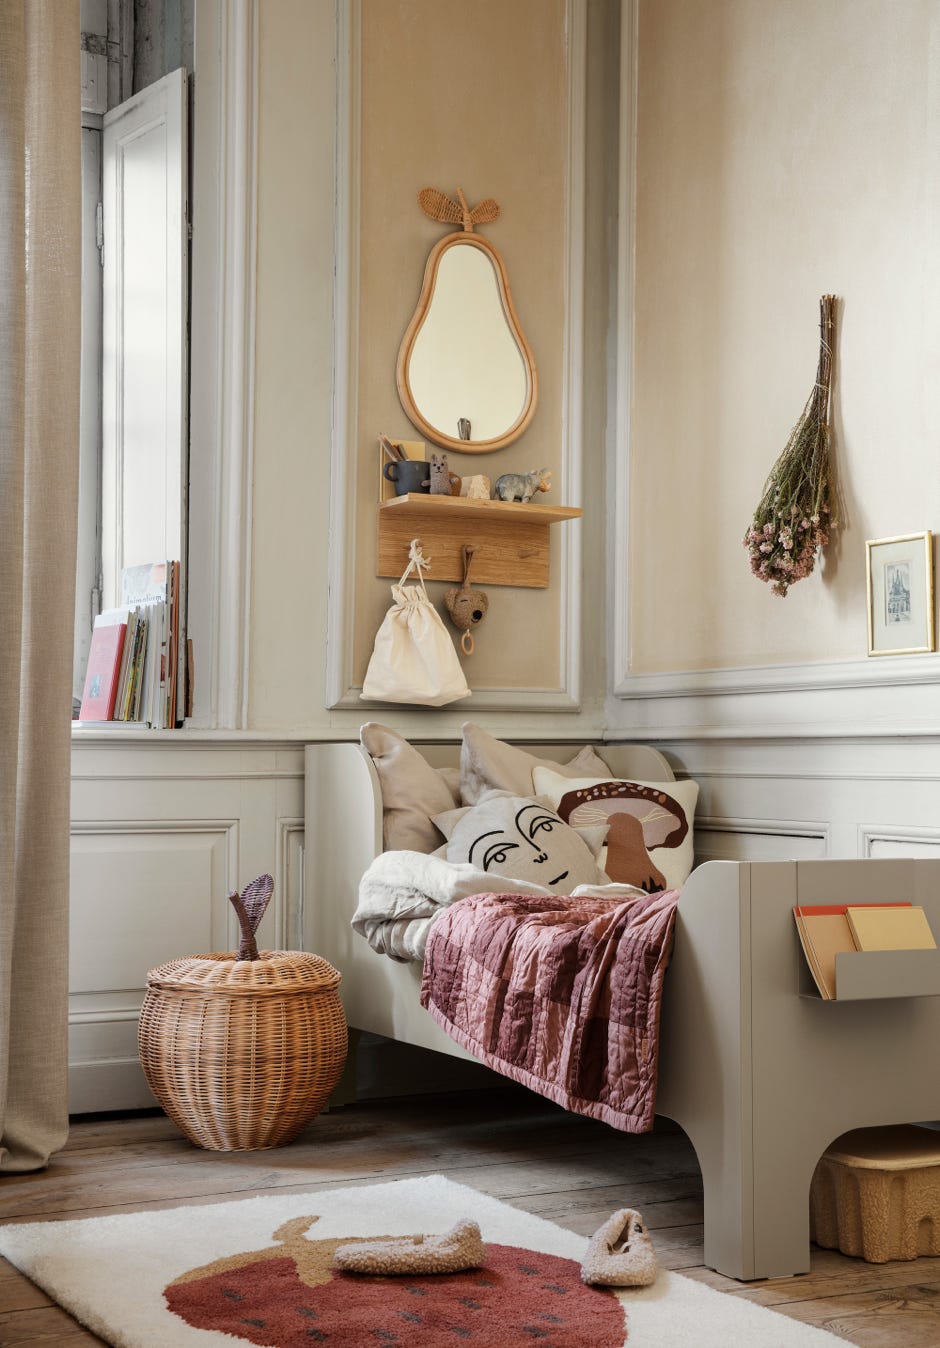 Apple & Pear Basket, Mirror, Cushion, Blanket